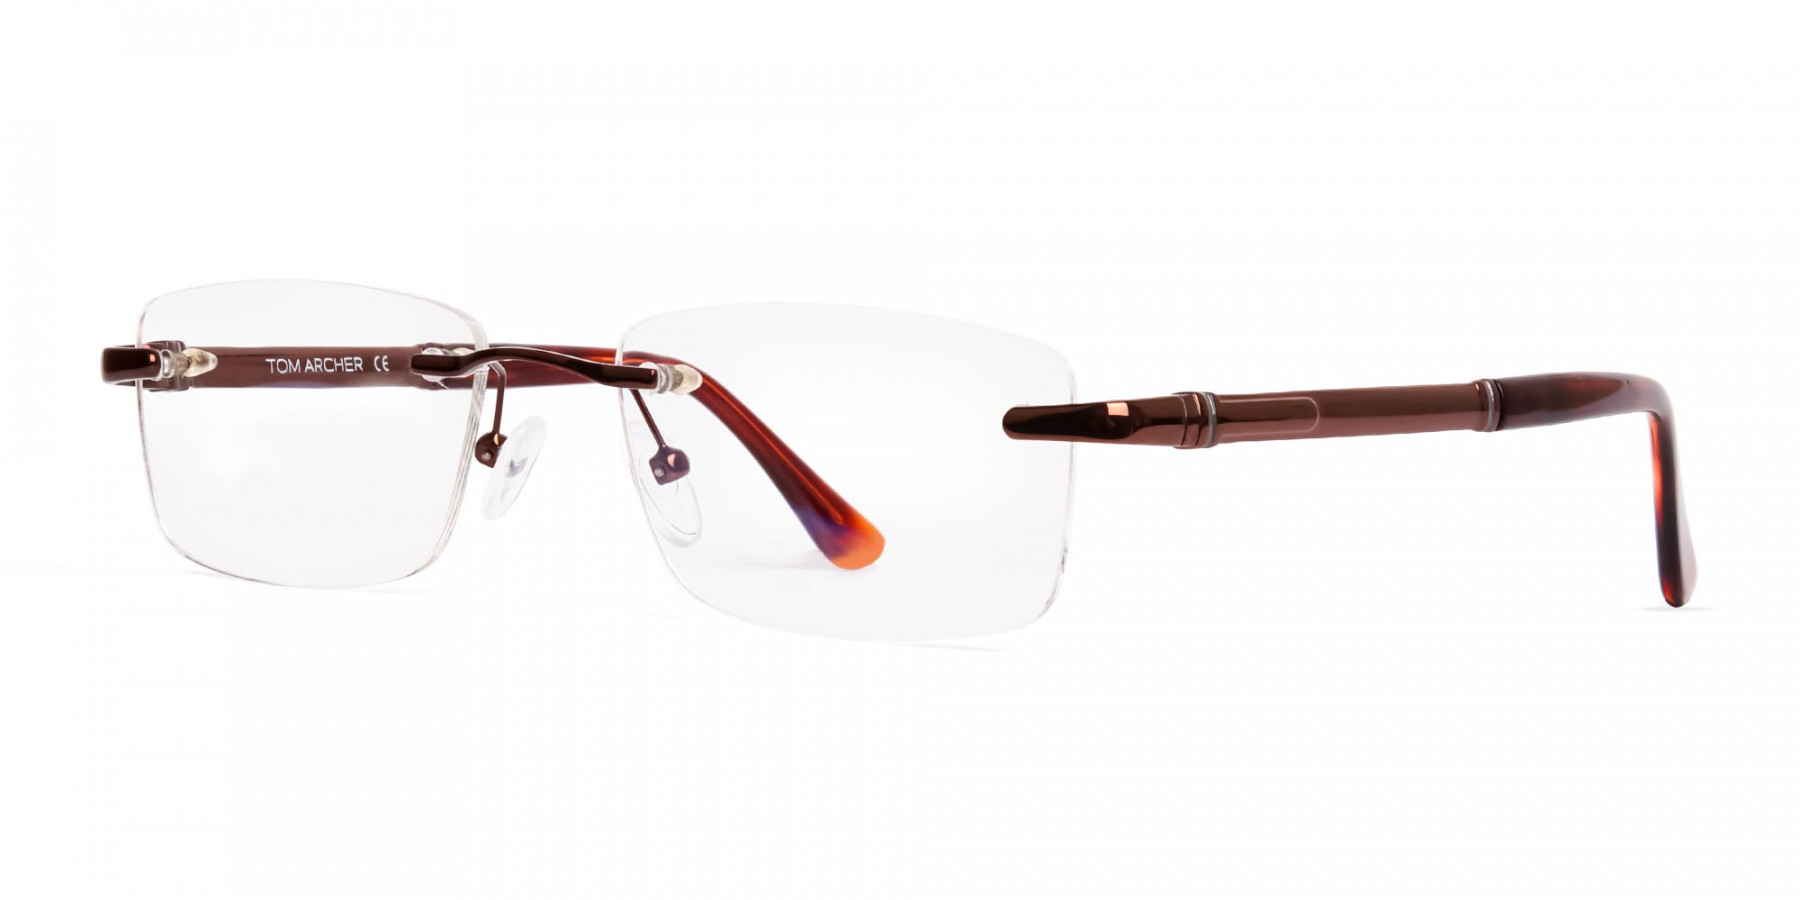 brown-rectangular-rimless-metal-glasses-frames-1